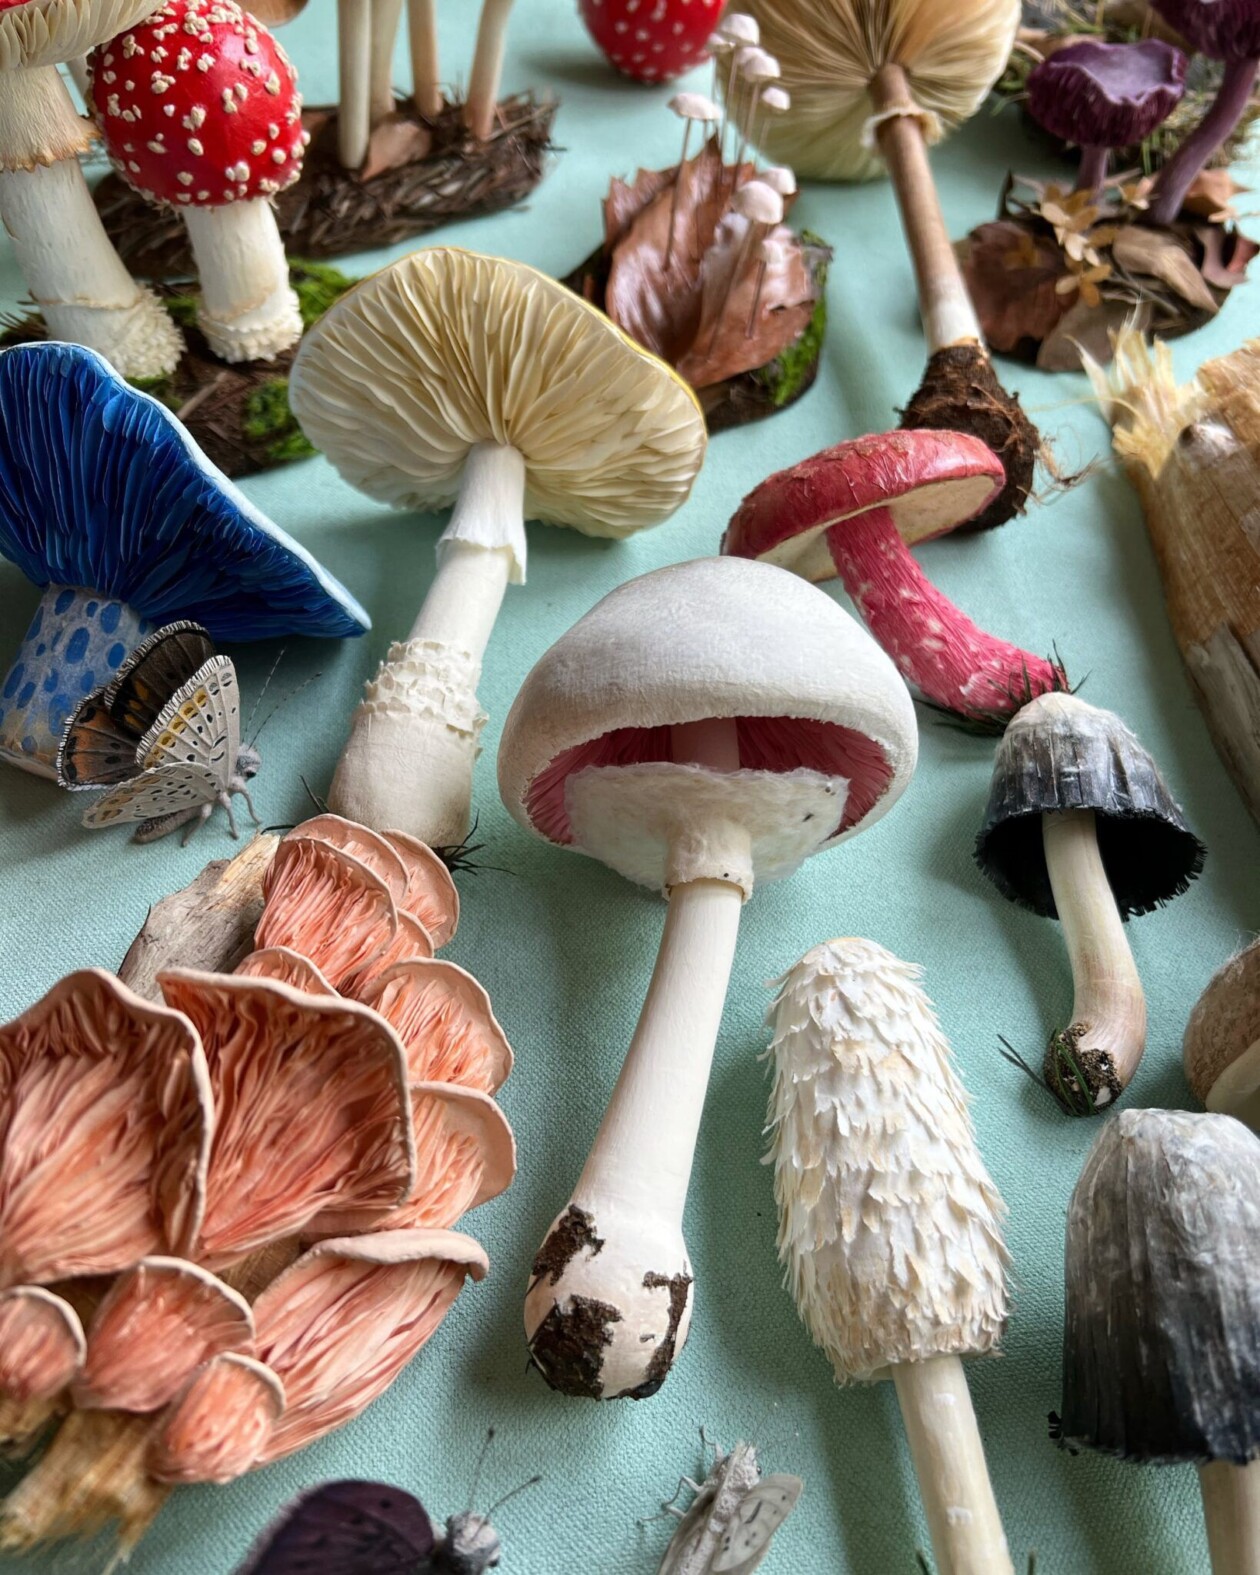 Splendid Lifelike Paper Sculptures Of Animals, Plants, Vegetables, And Mushrooms By ann Wood (11)